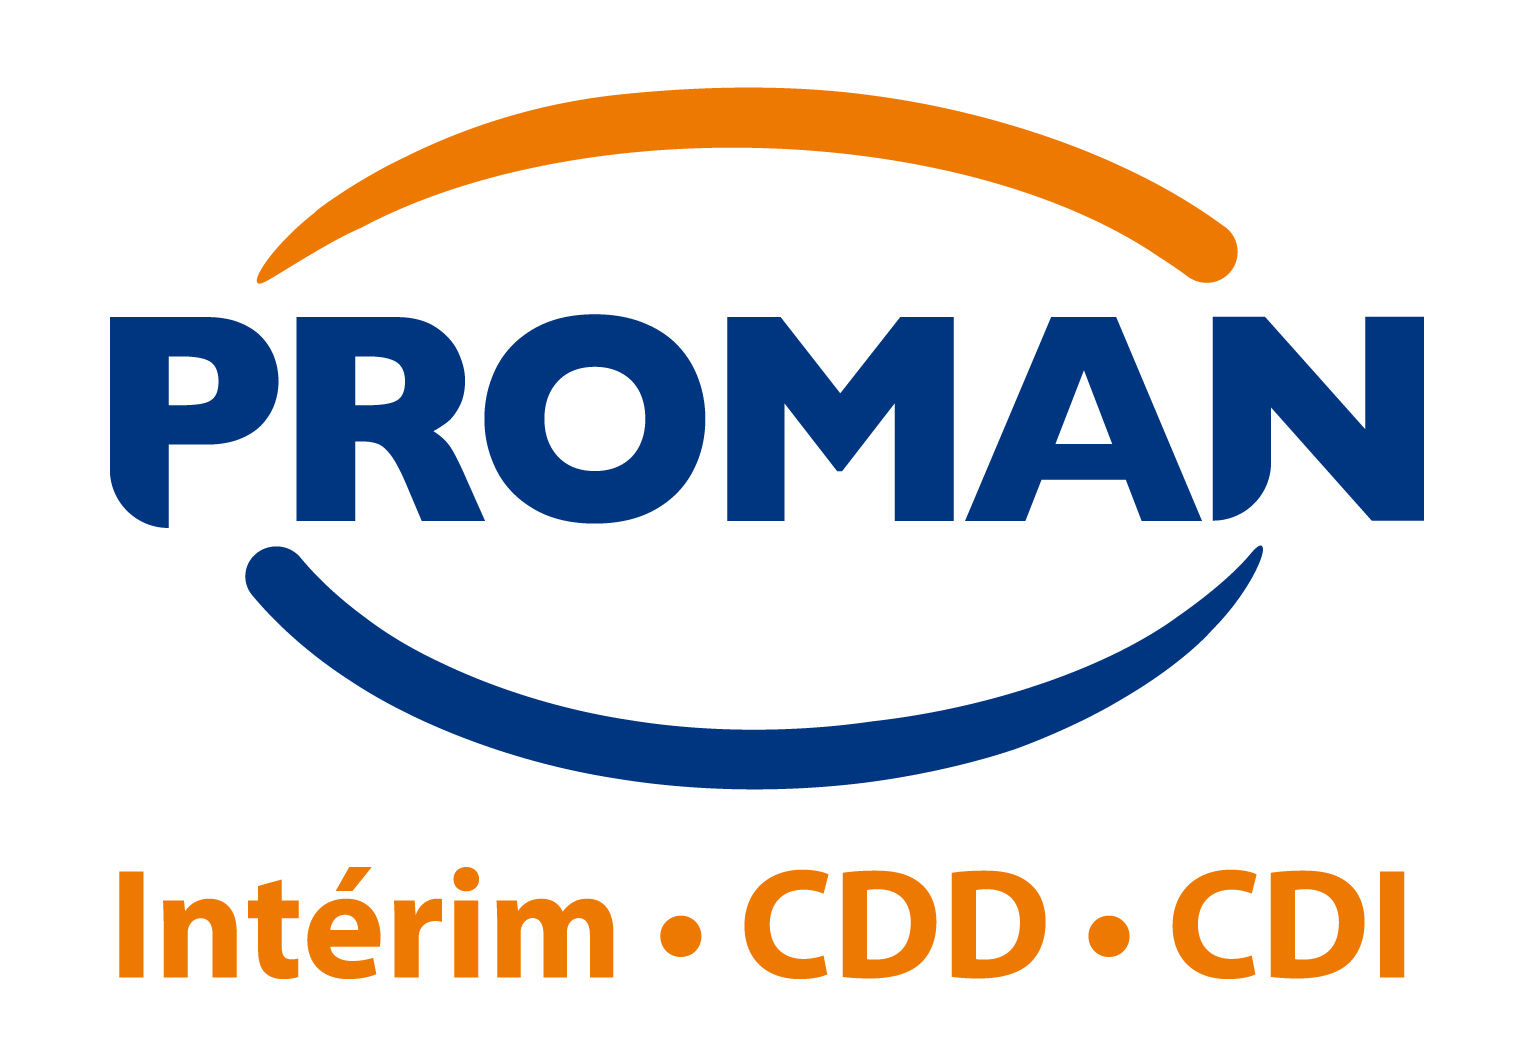 PROMAN | Agence de recrutement en intérim et emploi CDD / CDI